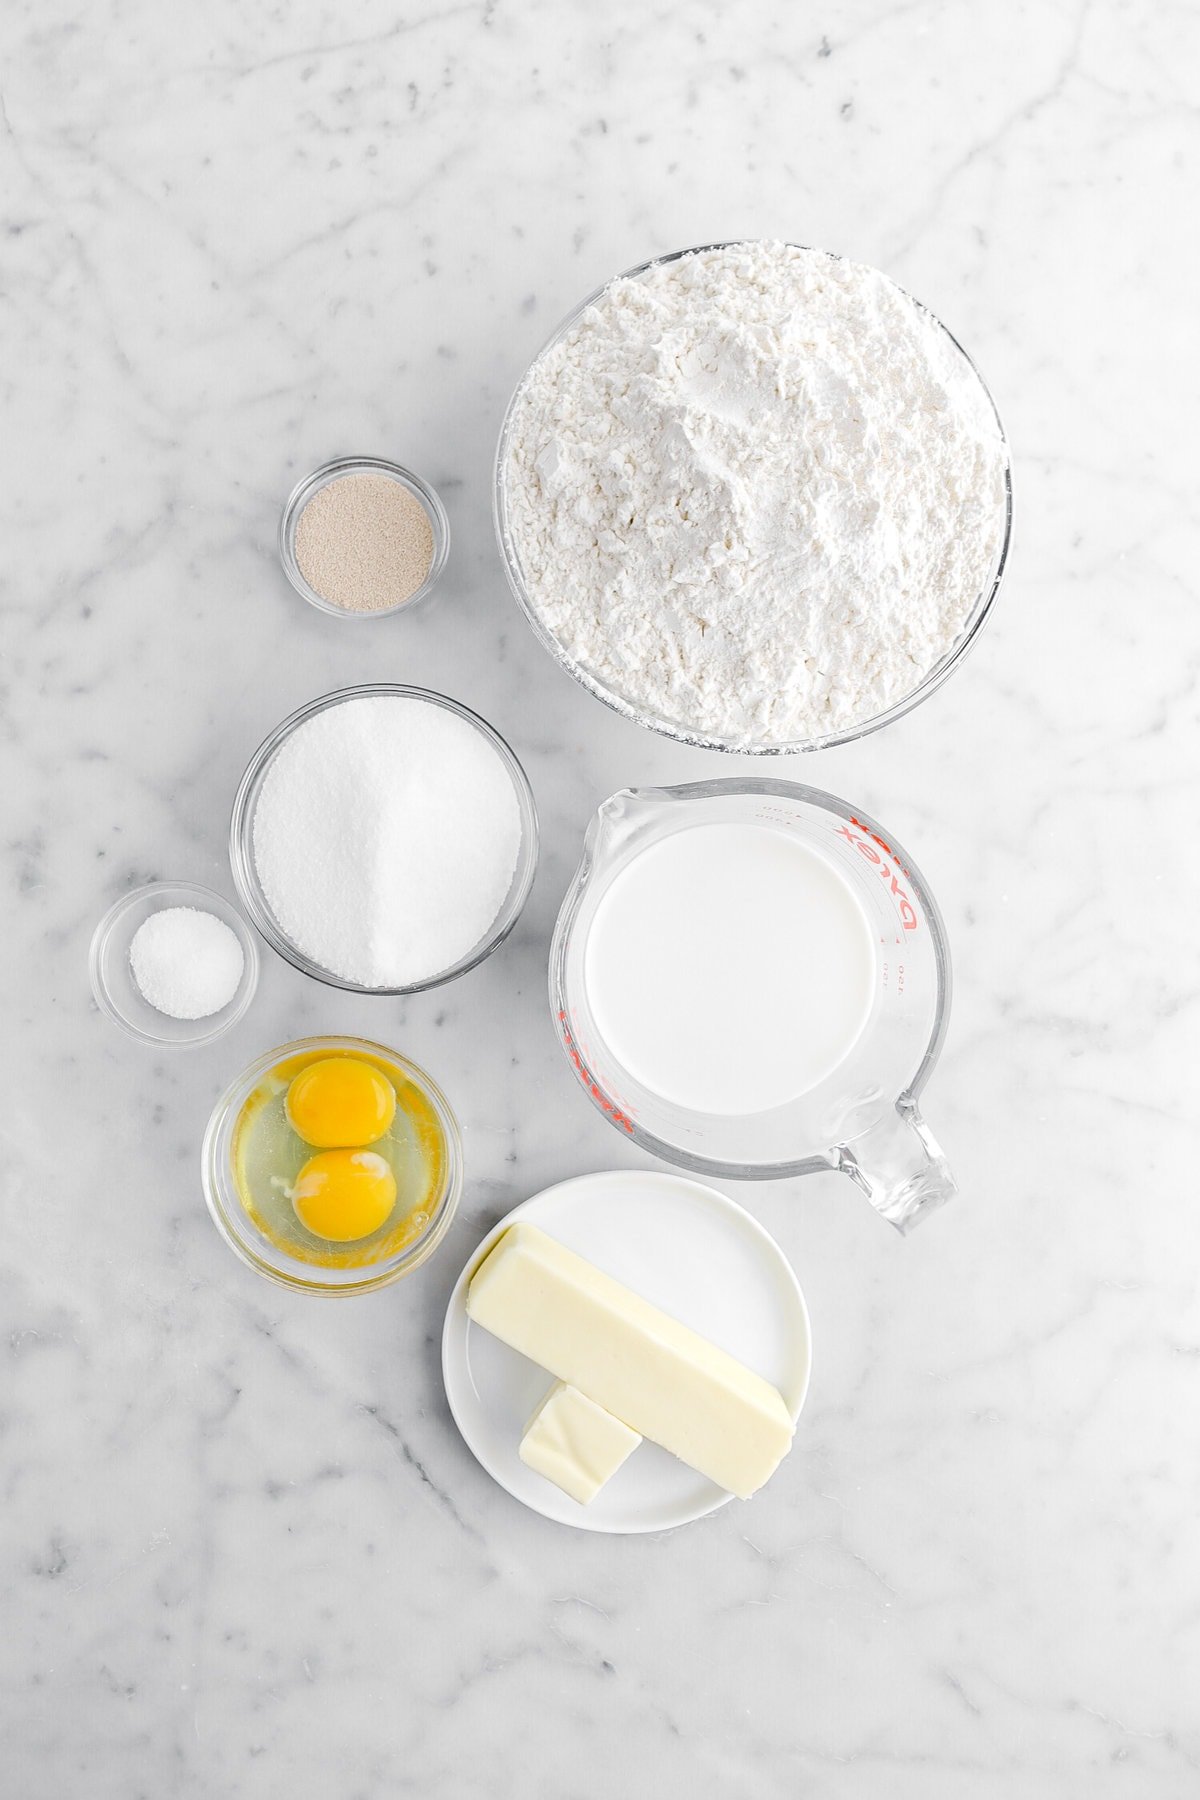 yeast, flour, sugar, salt, milk, eggs, and butter on marble surface.